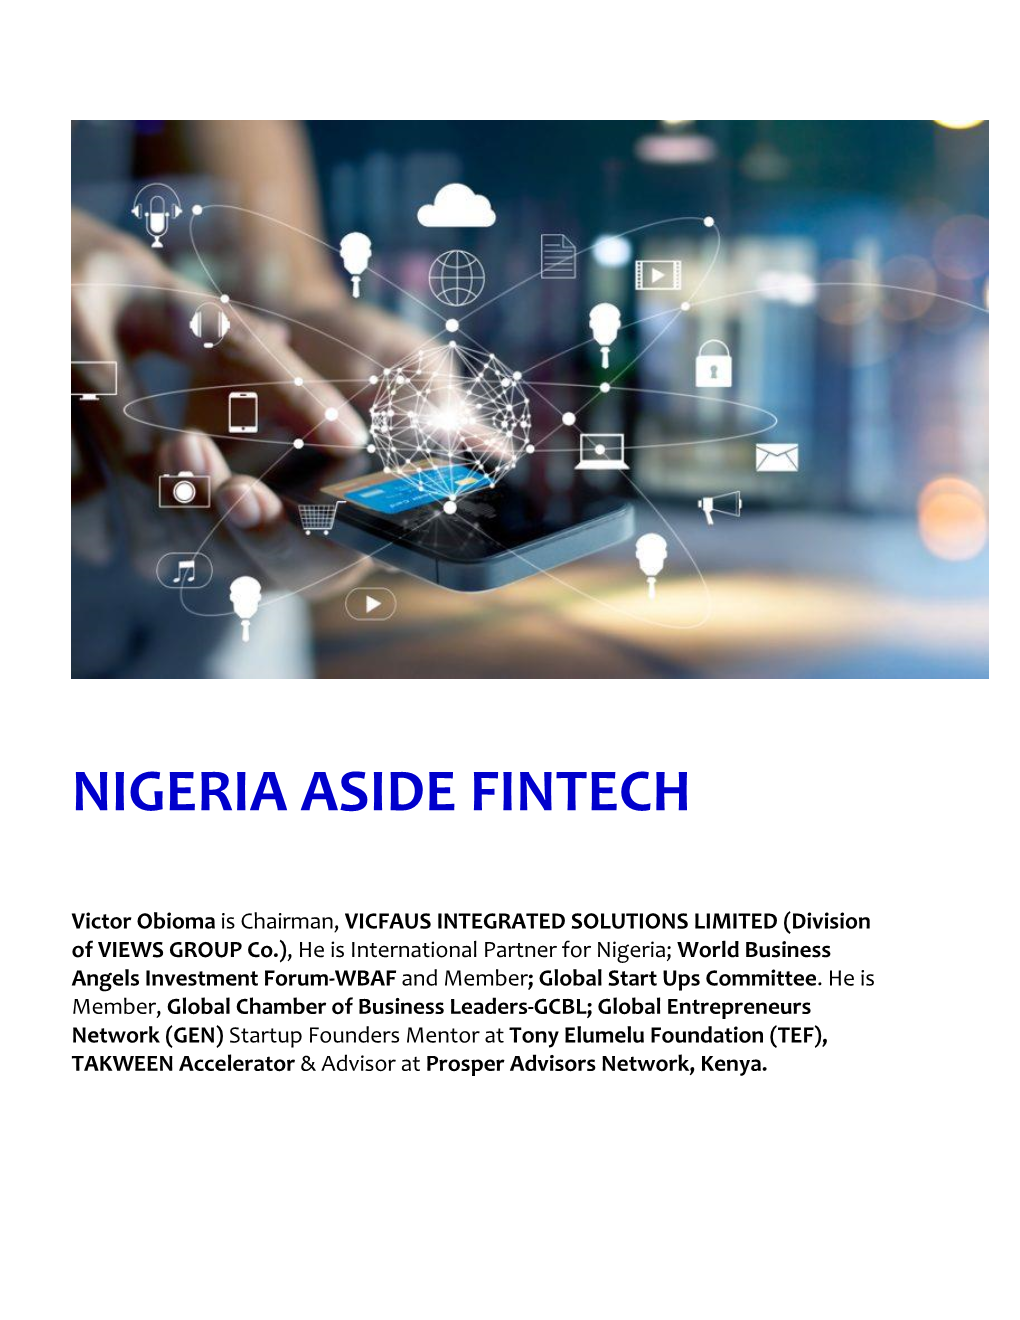 Nigeria Aside Fintech